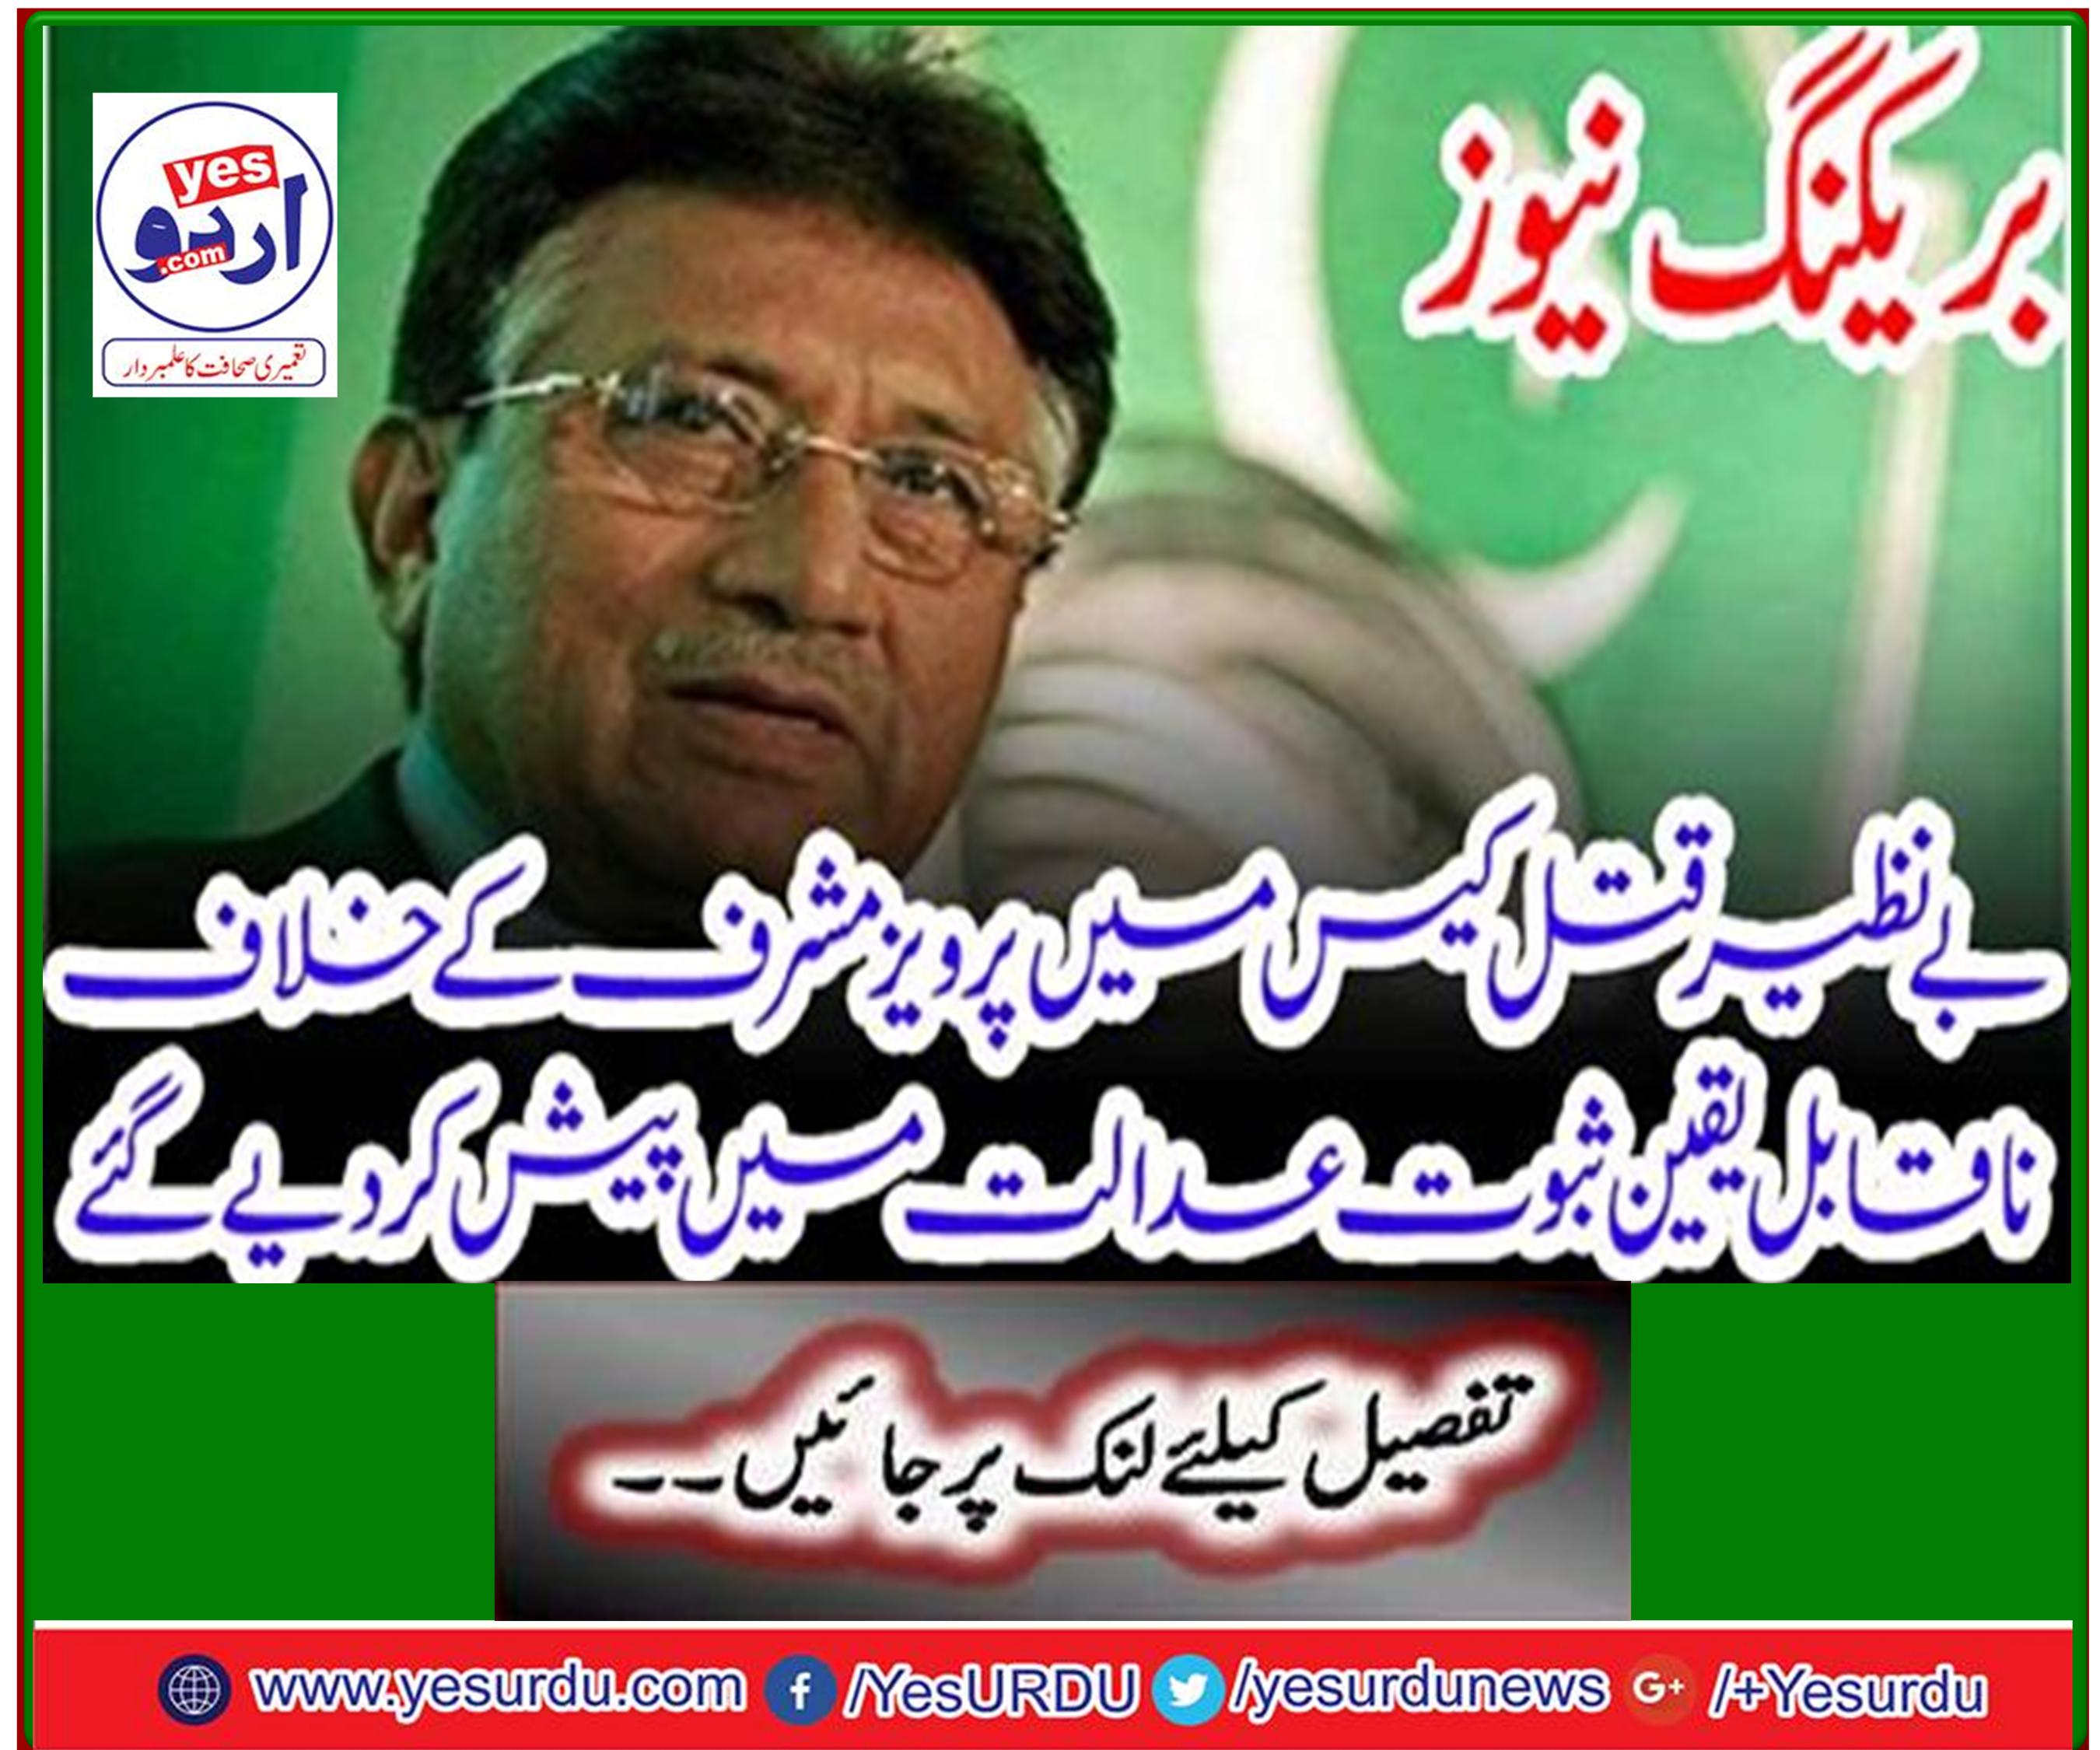 Breaking News: Incredible evidence presented against Musharraf in Benazir assassination case